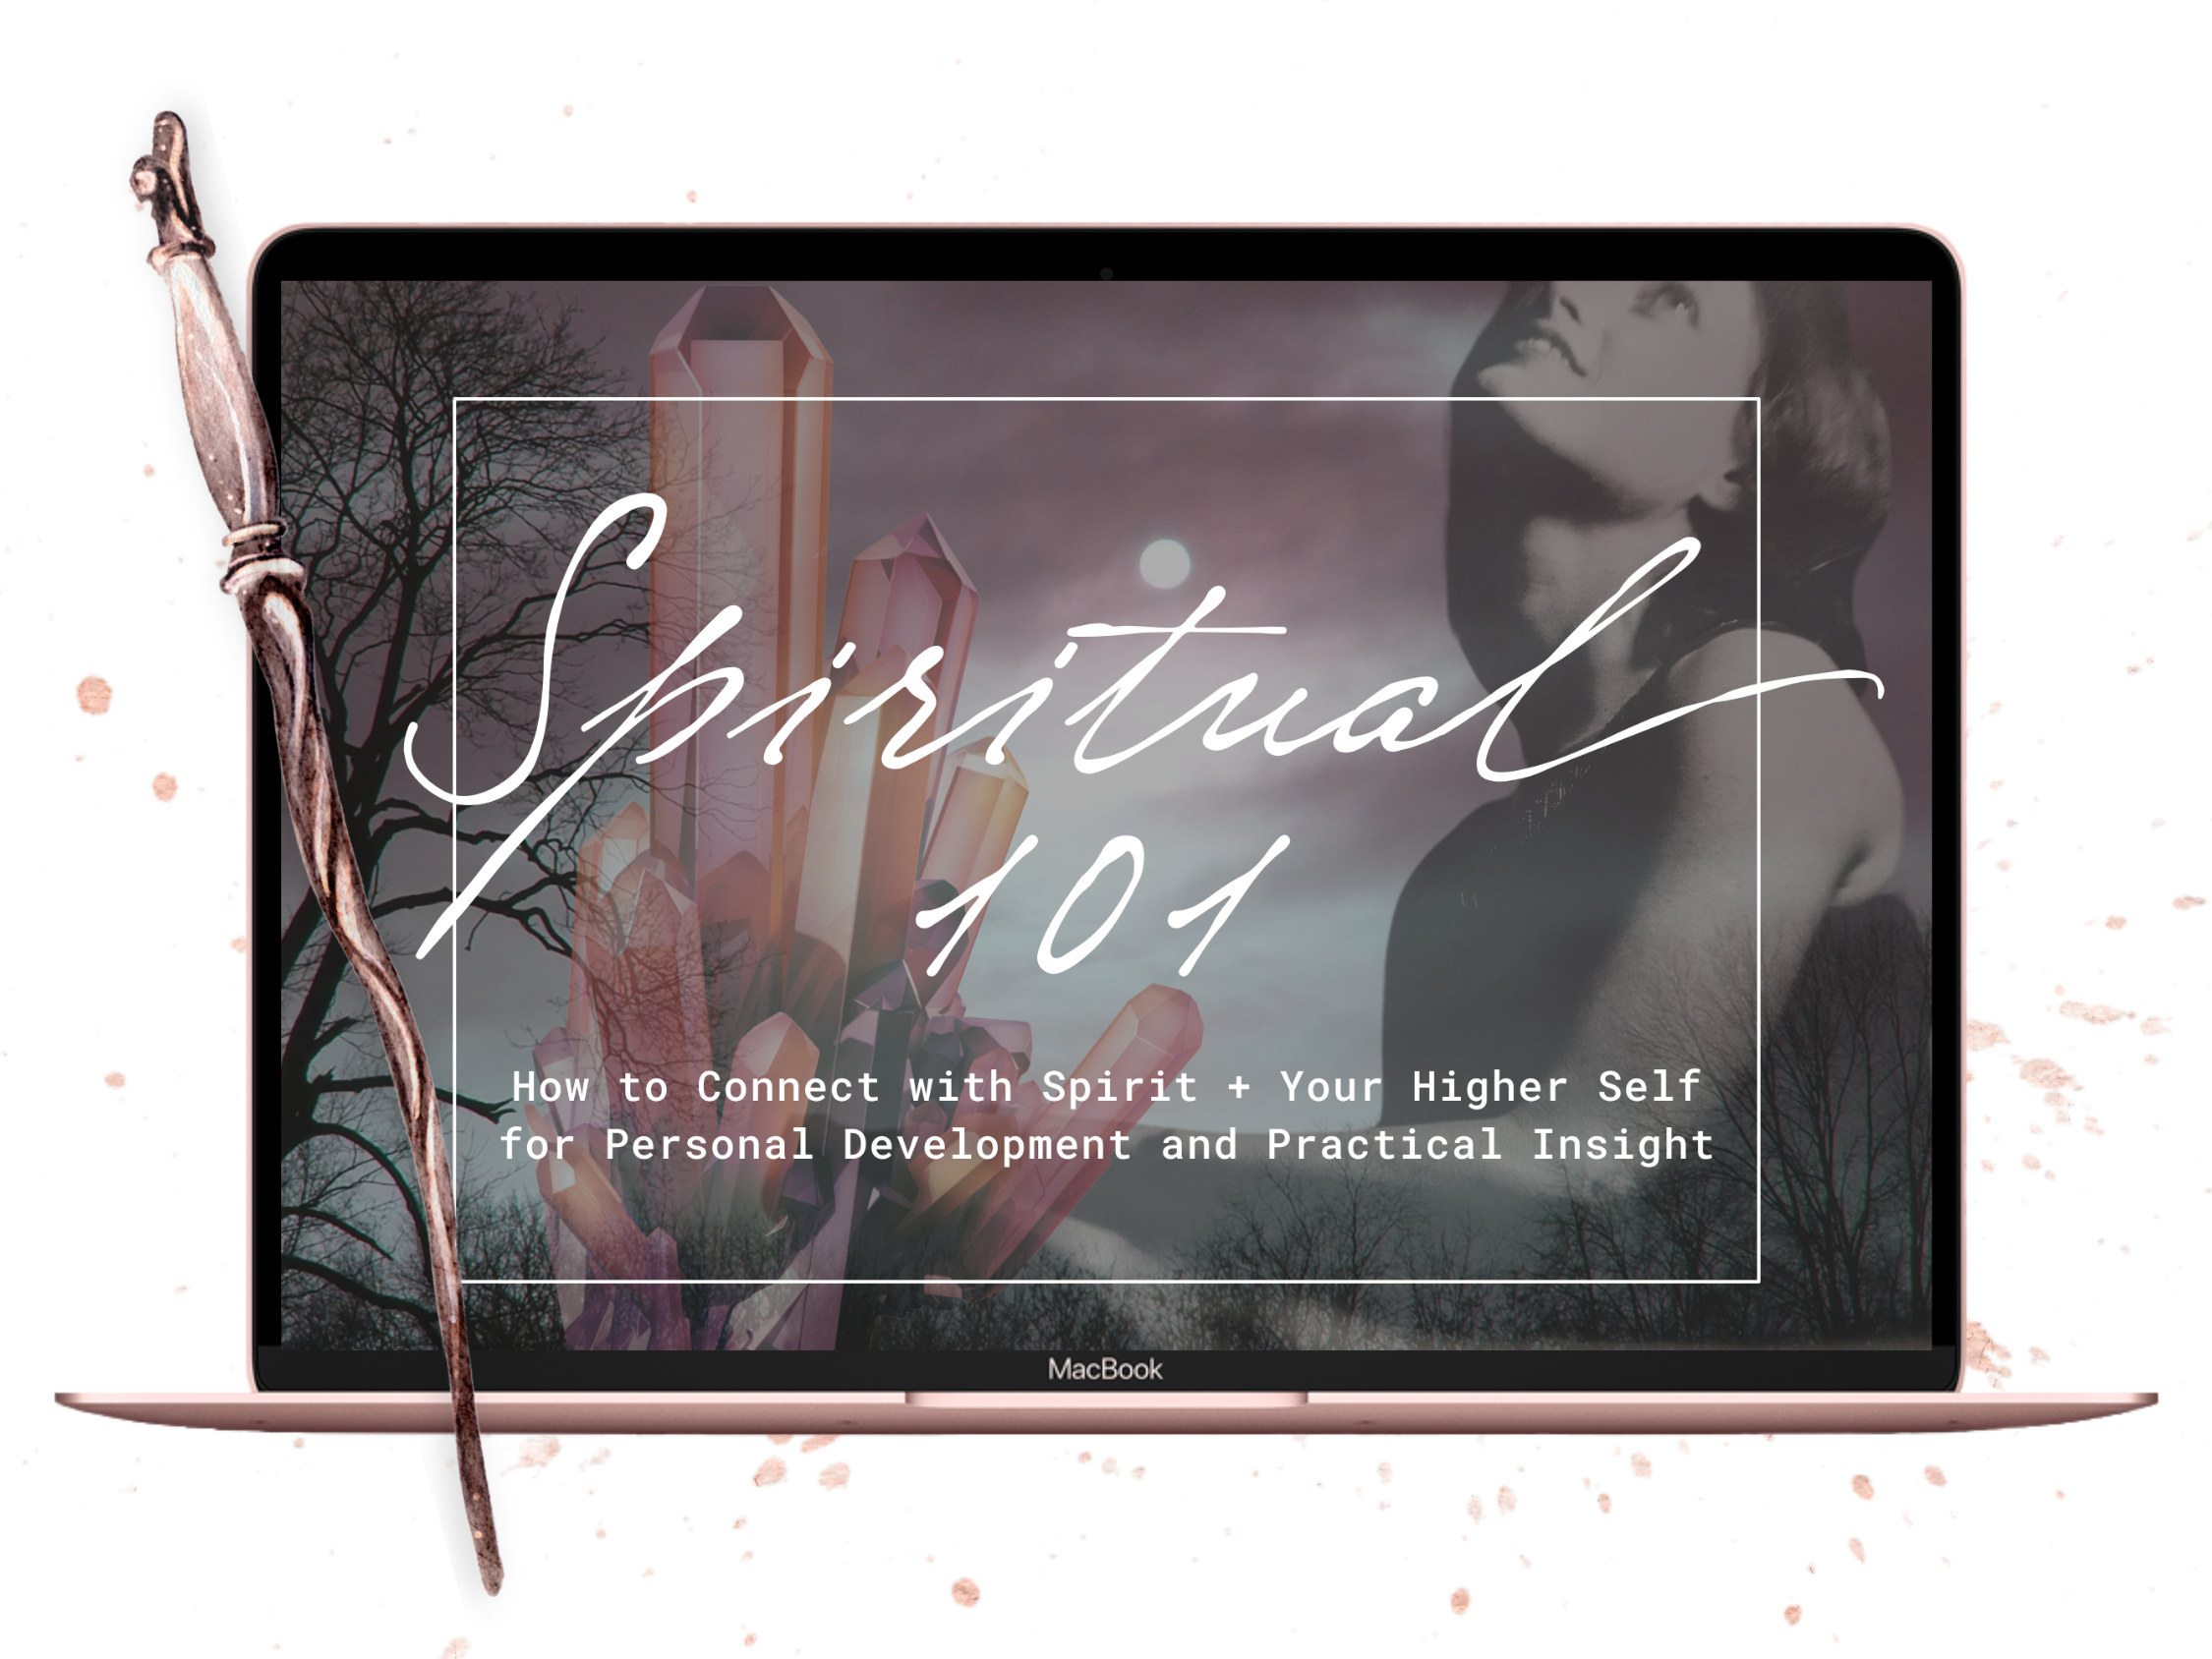 Spiritual 101 Mini Course with Tabitha Stitt, The Self-Help Psychic, Reiki Master energy healer and spiritual teacher